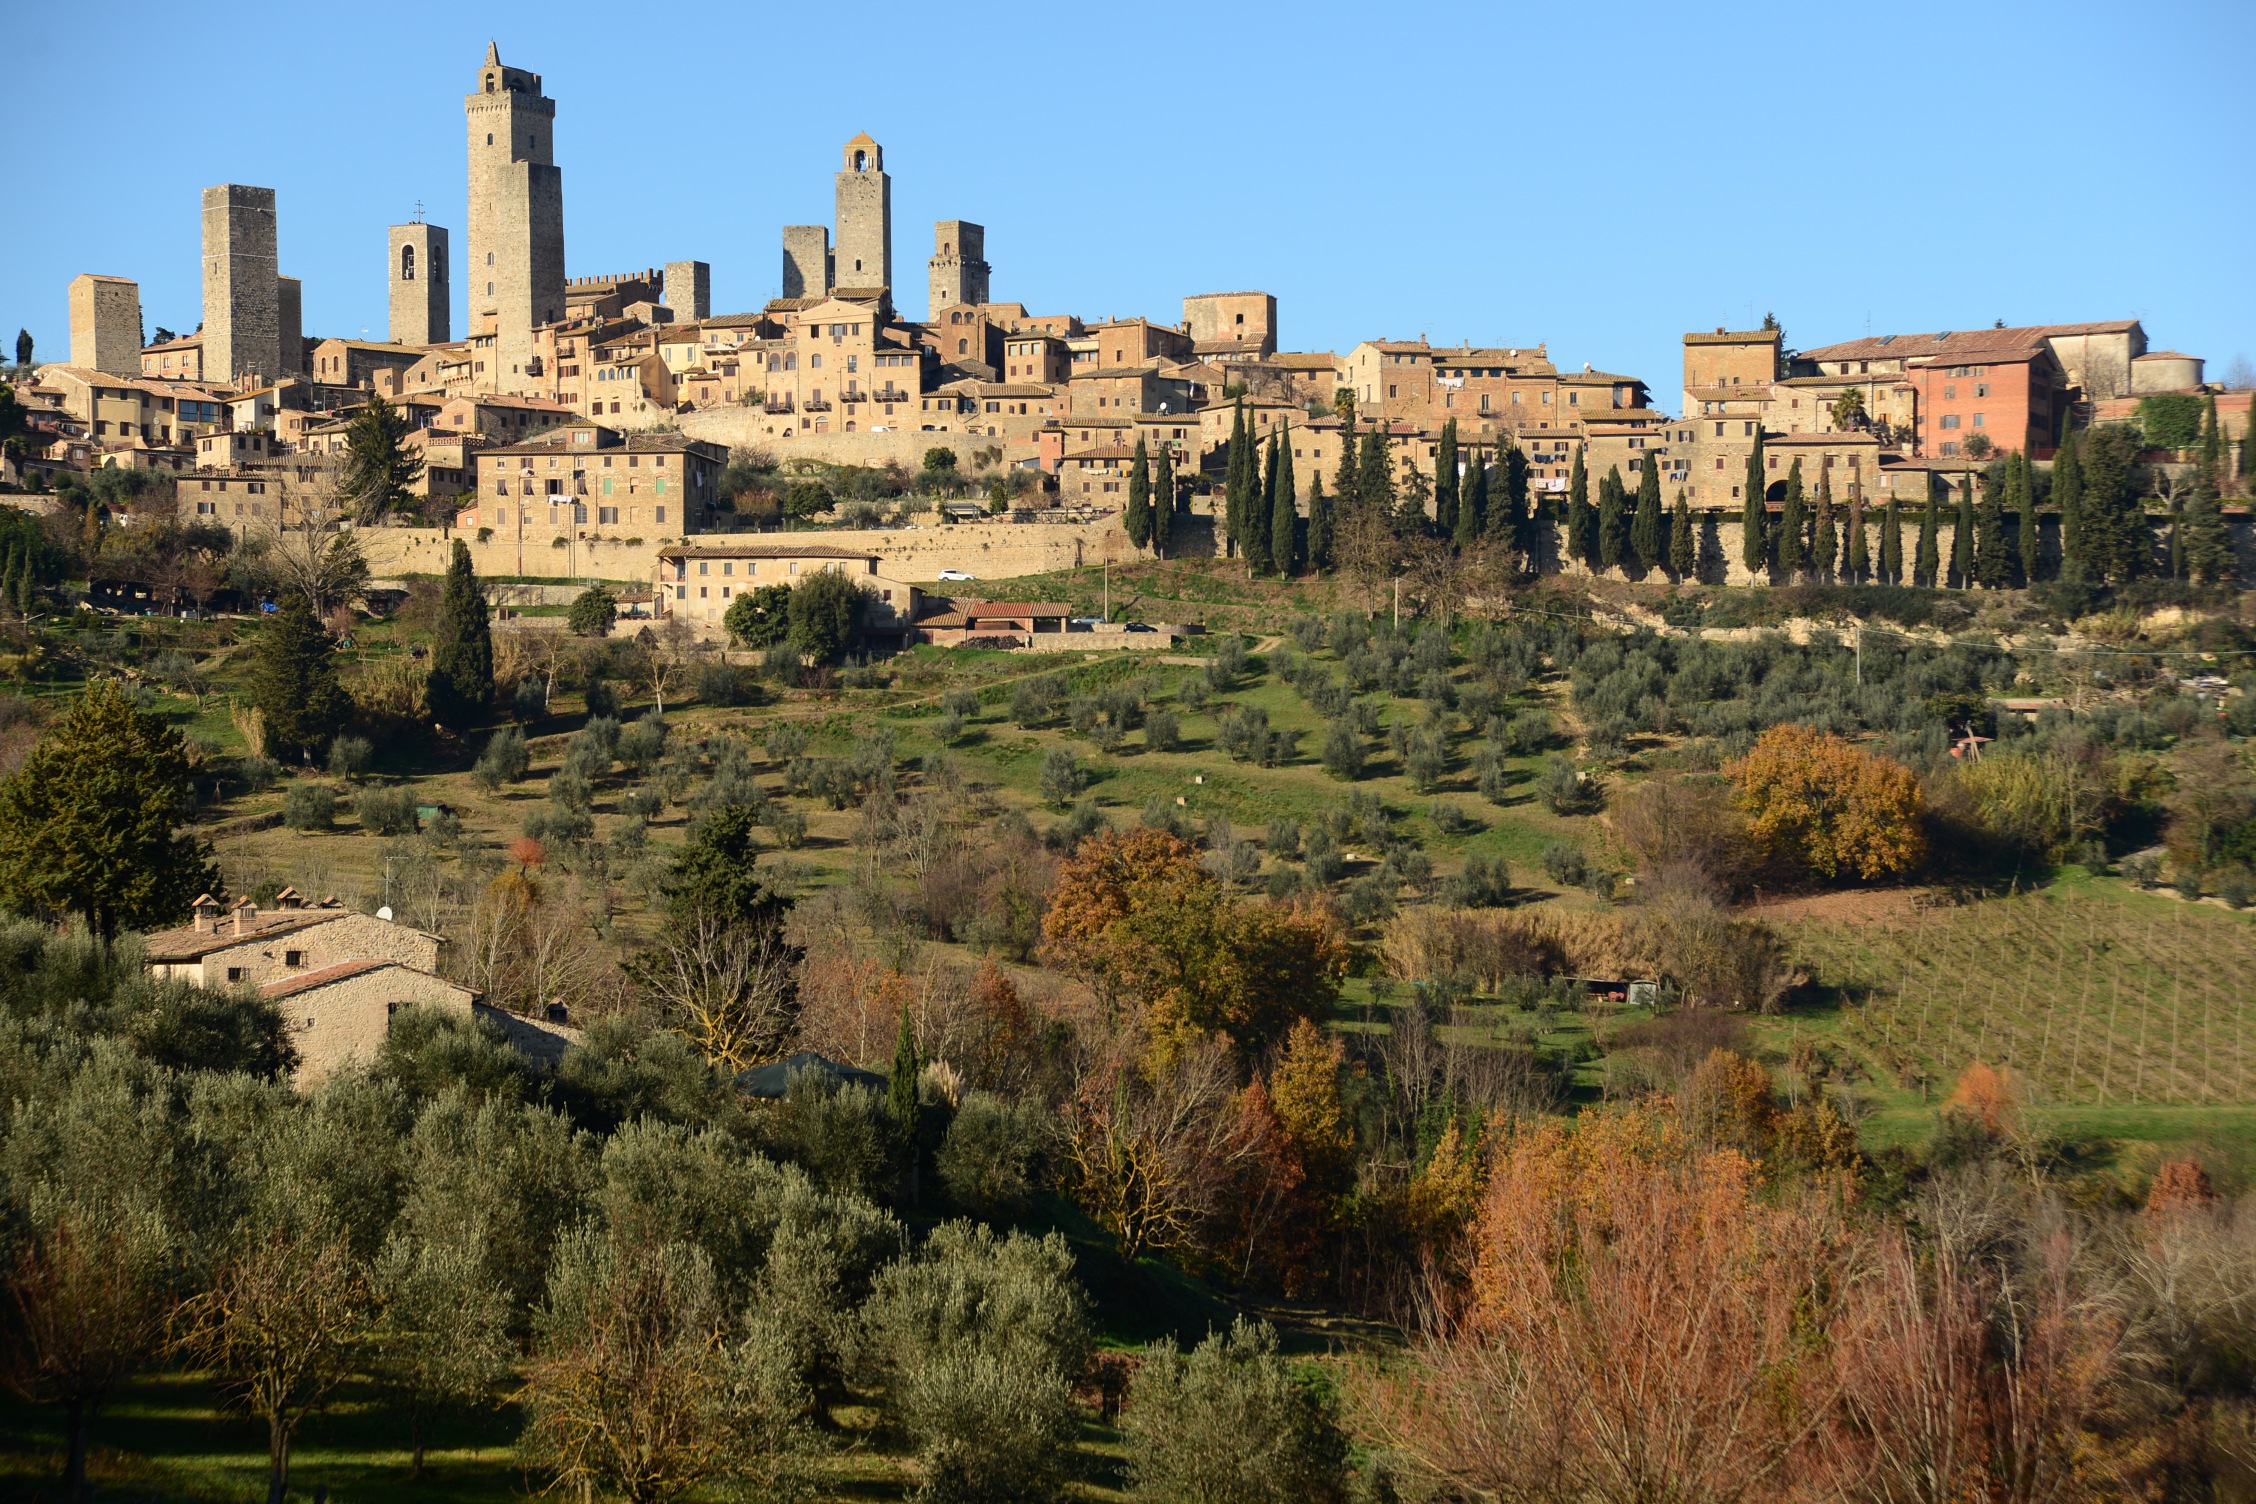 San Gimignano Towers as seen from Via Veccia